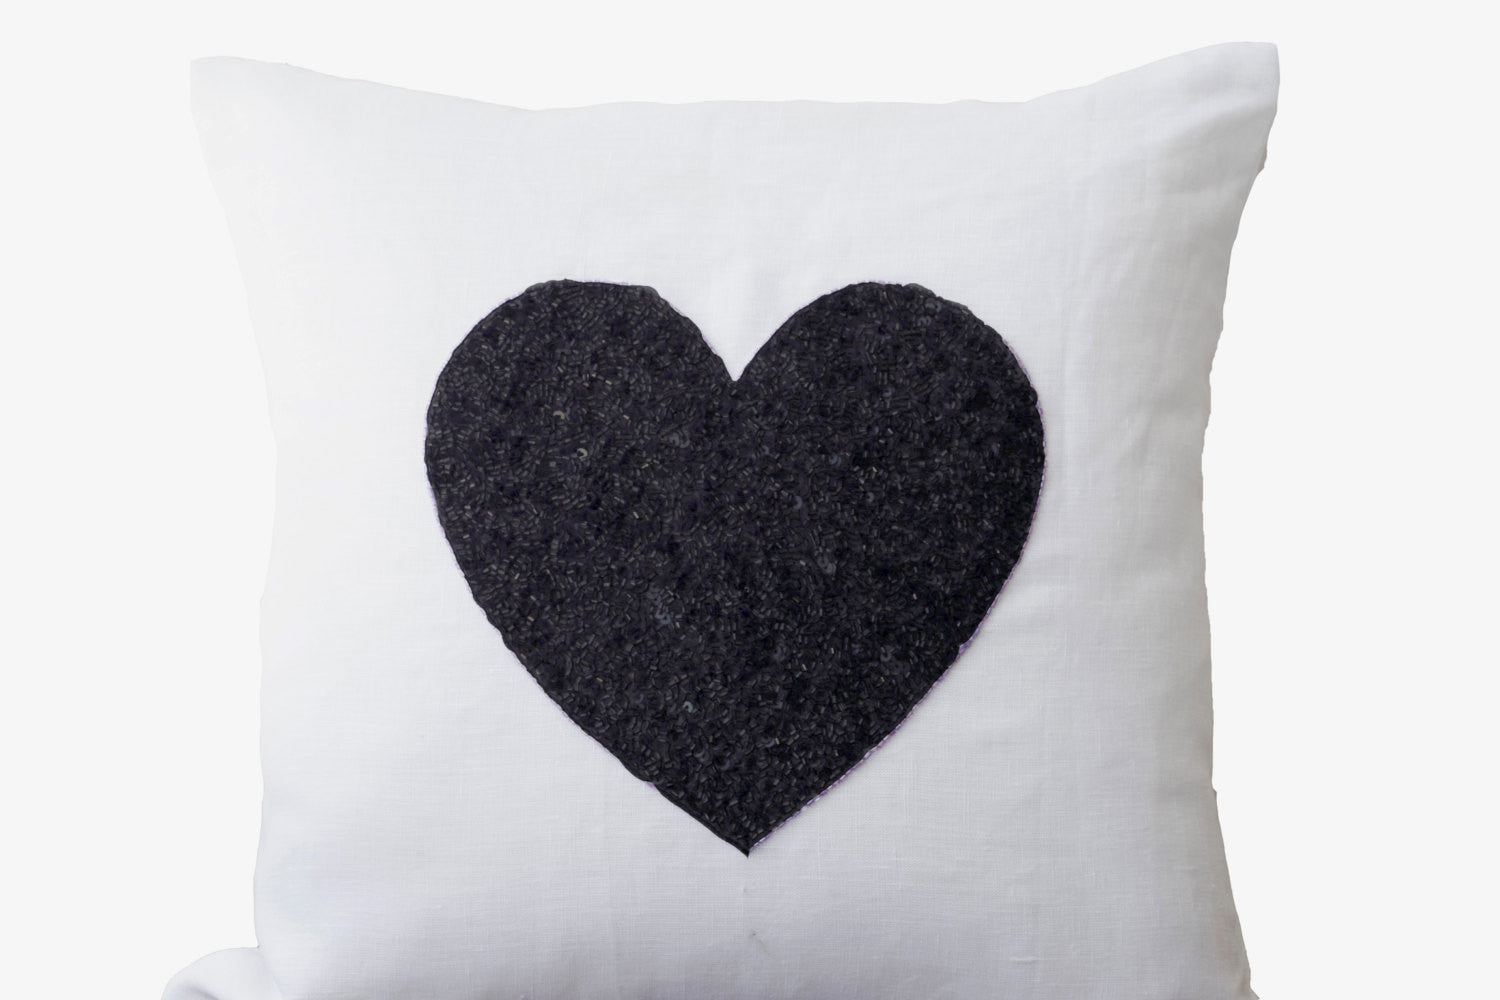 Handmade white linen throw pillow with black heart sequin